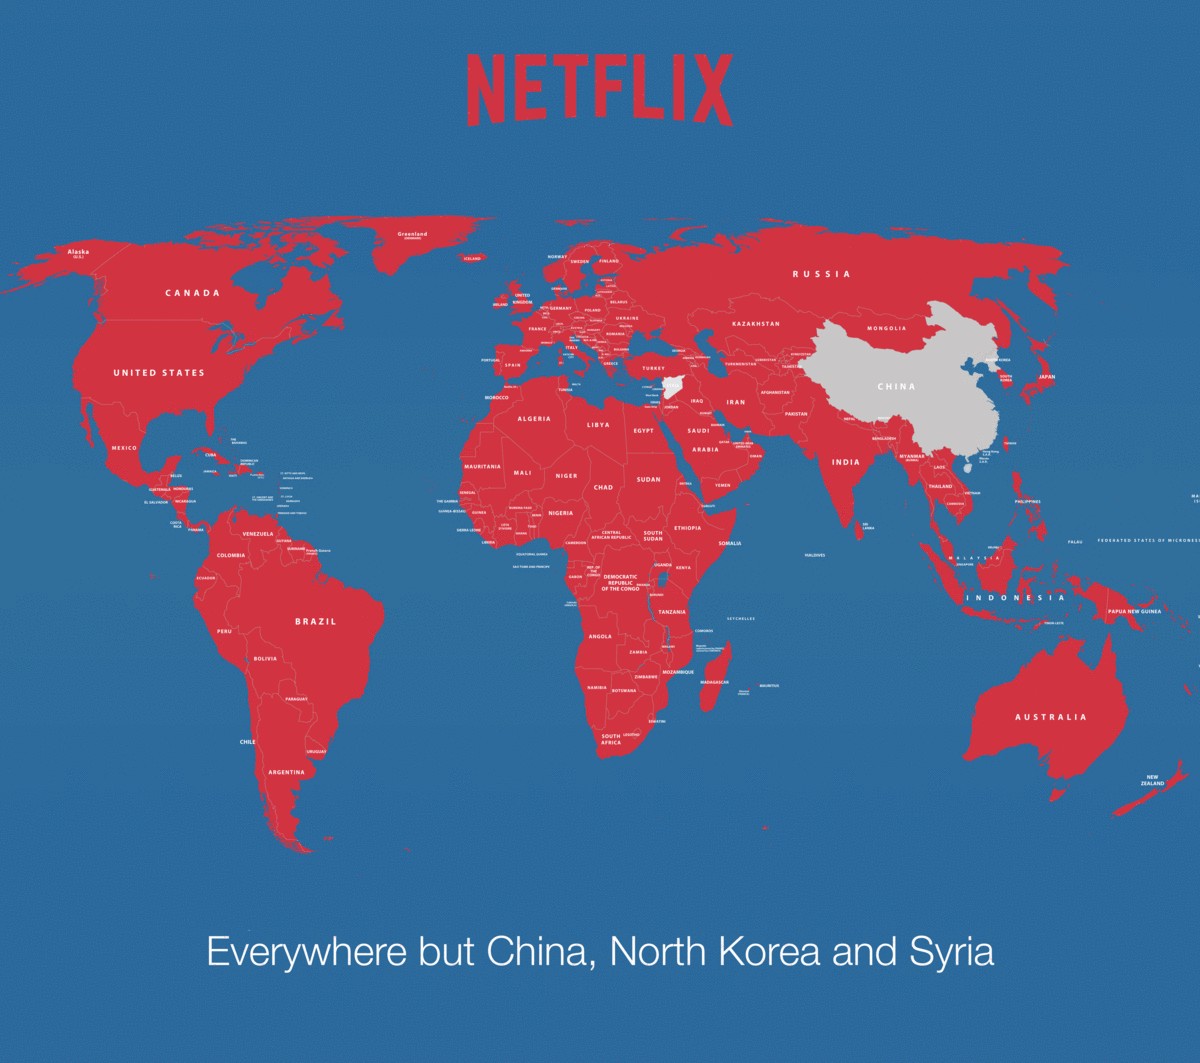 Netflix’s Secret Weapon: The World